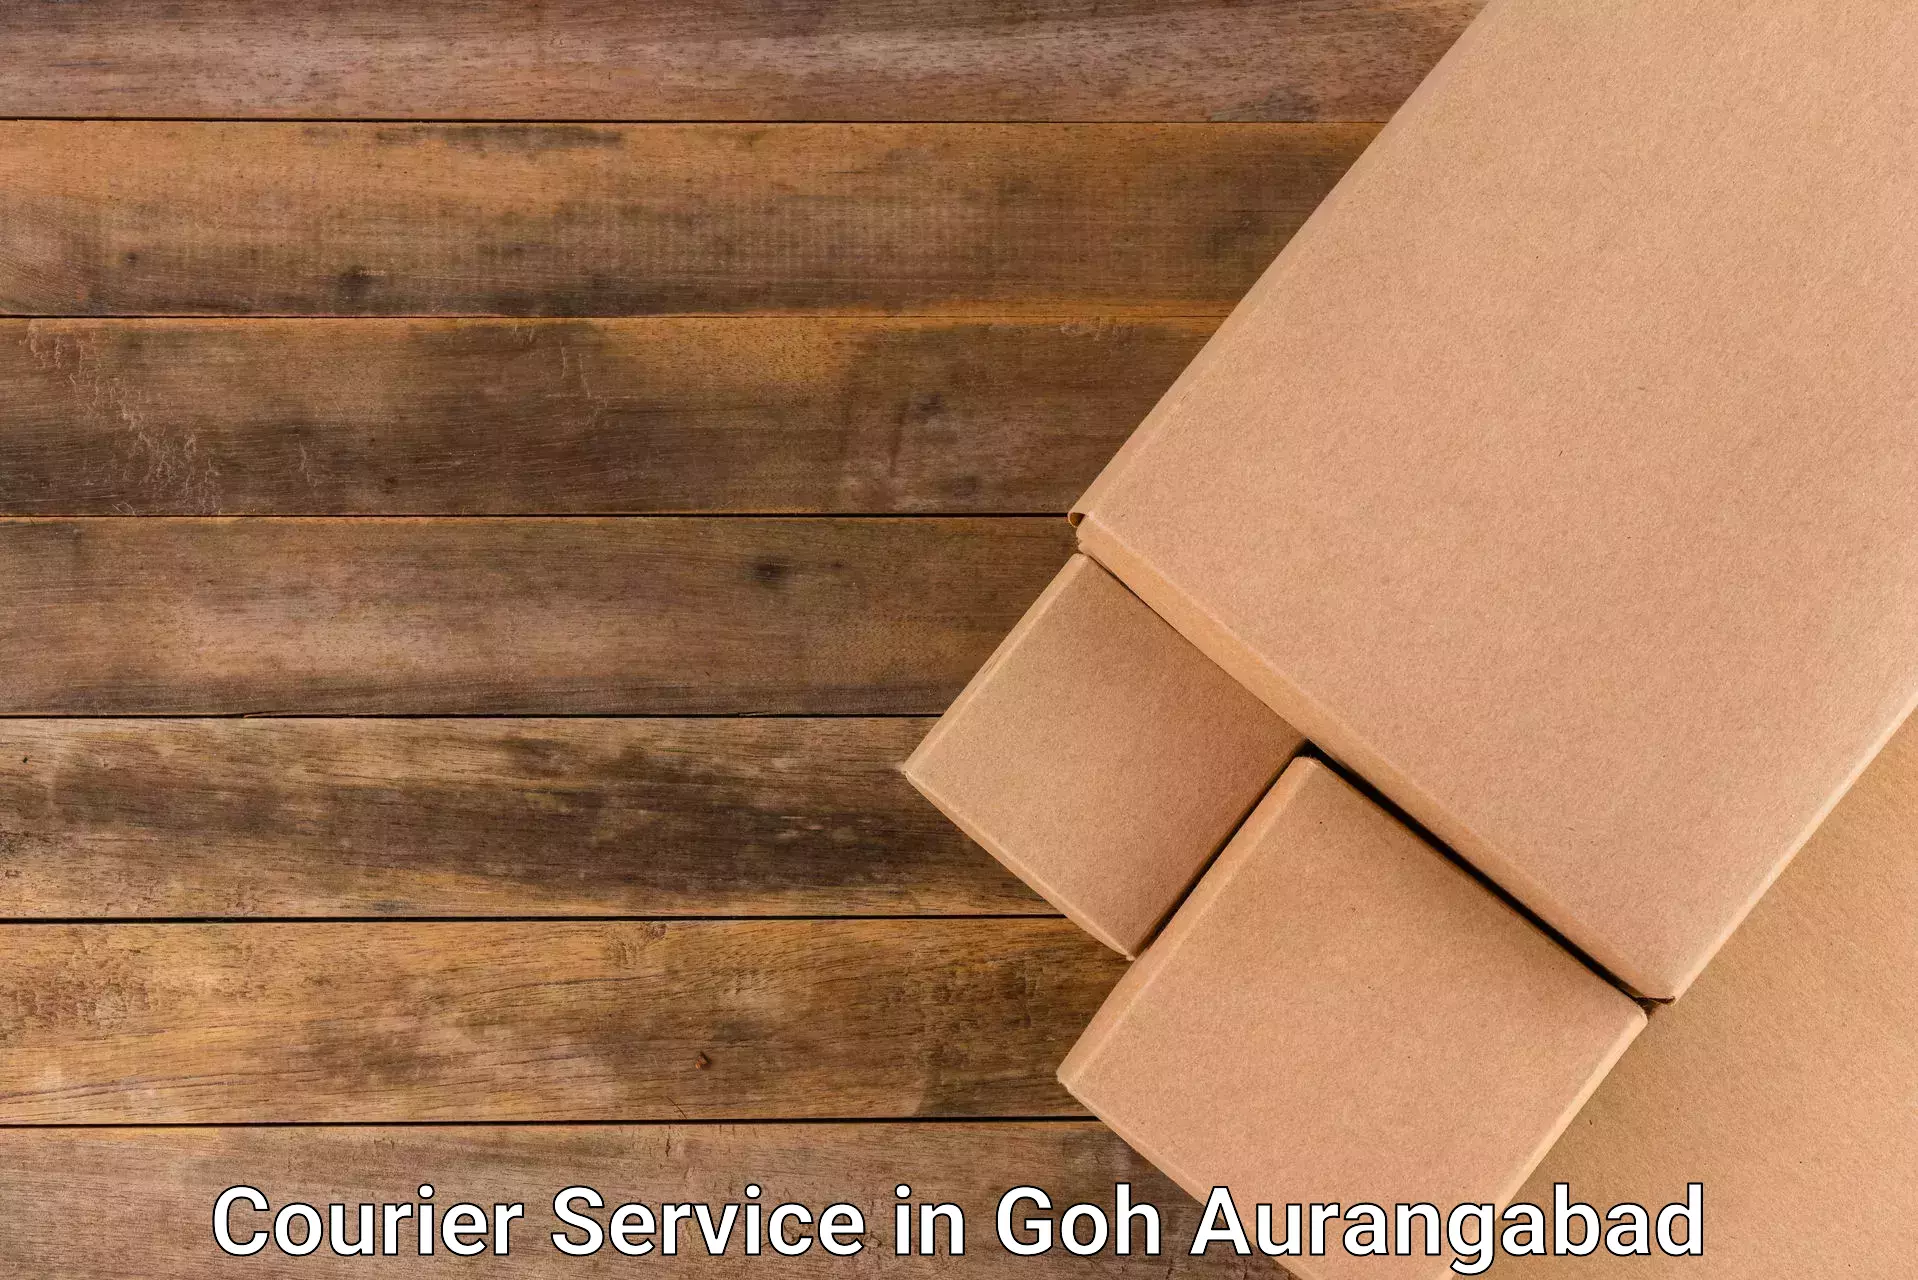 Lightweight parcel options in Goh Aurangabad